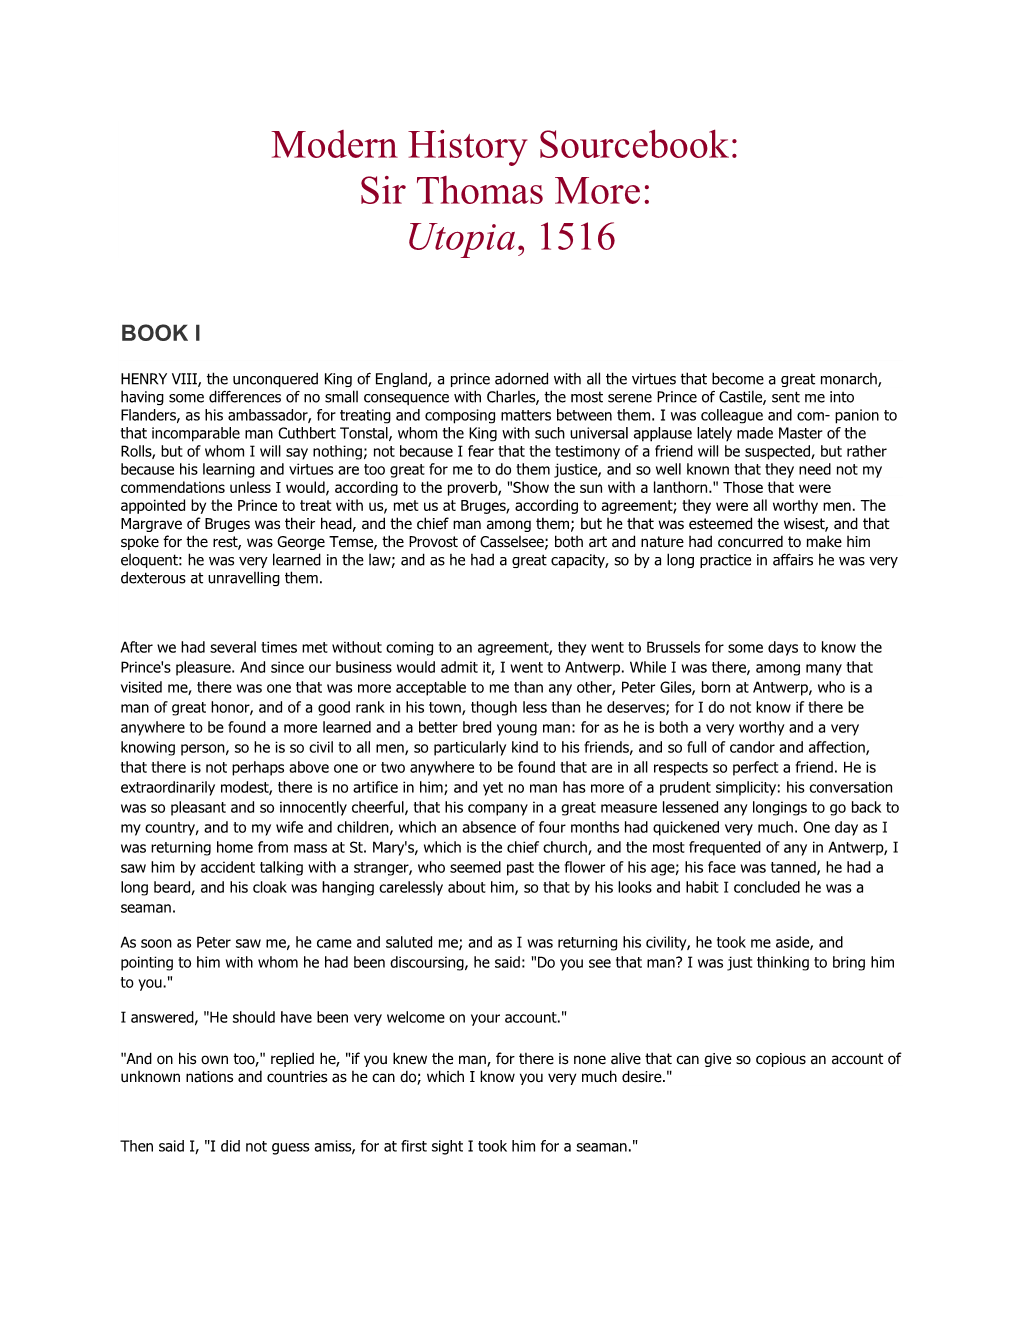 Modern History Sourcebook: Sir Thomas More: Utopia, 1516